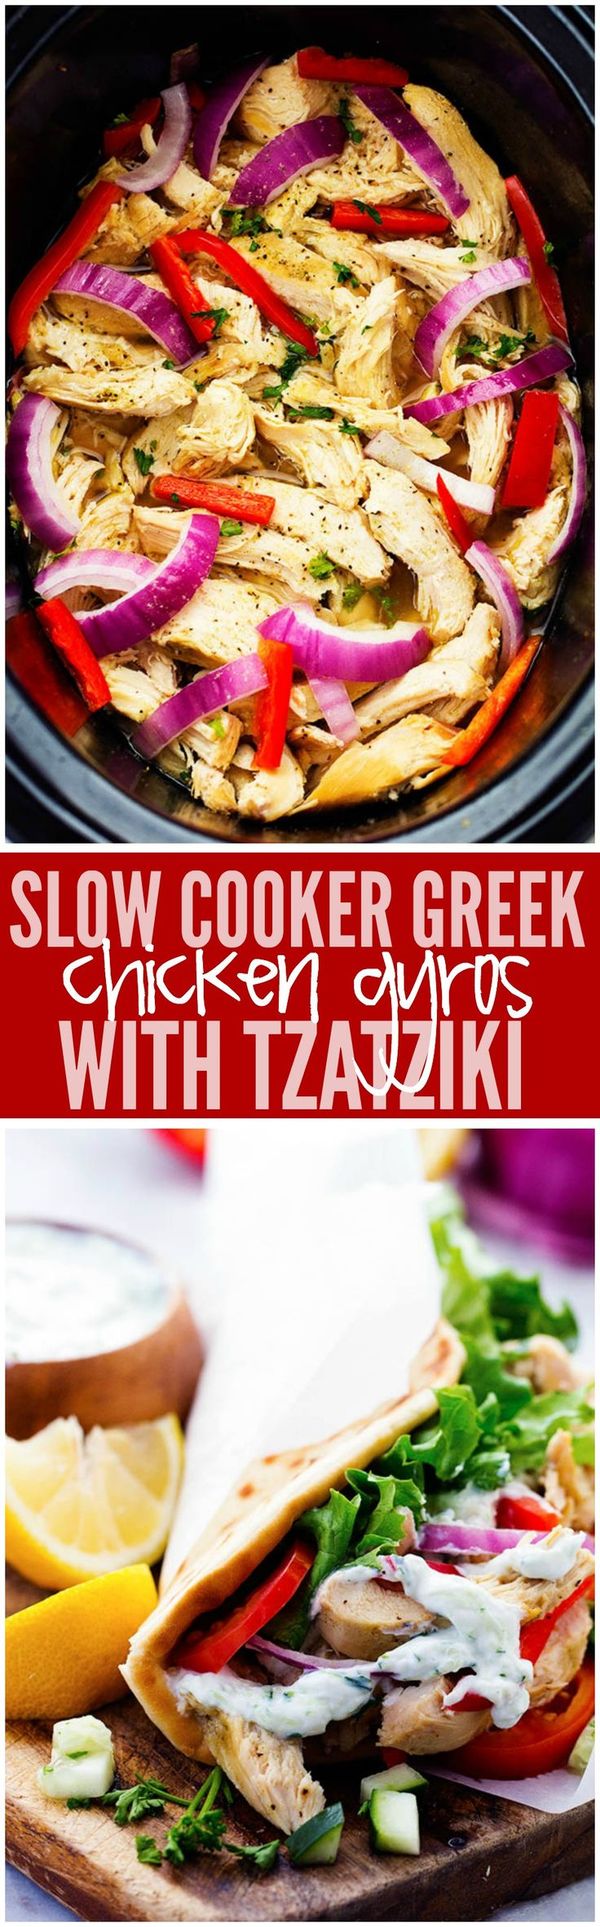 Slow Cooker Greek Chicken Gyros with Tzatziki